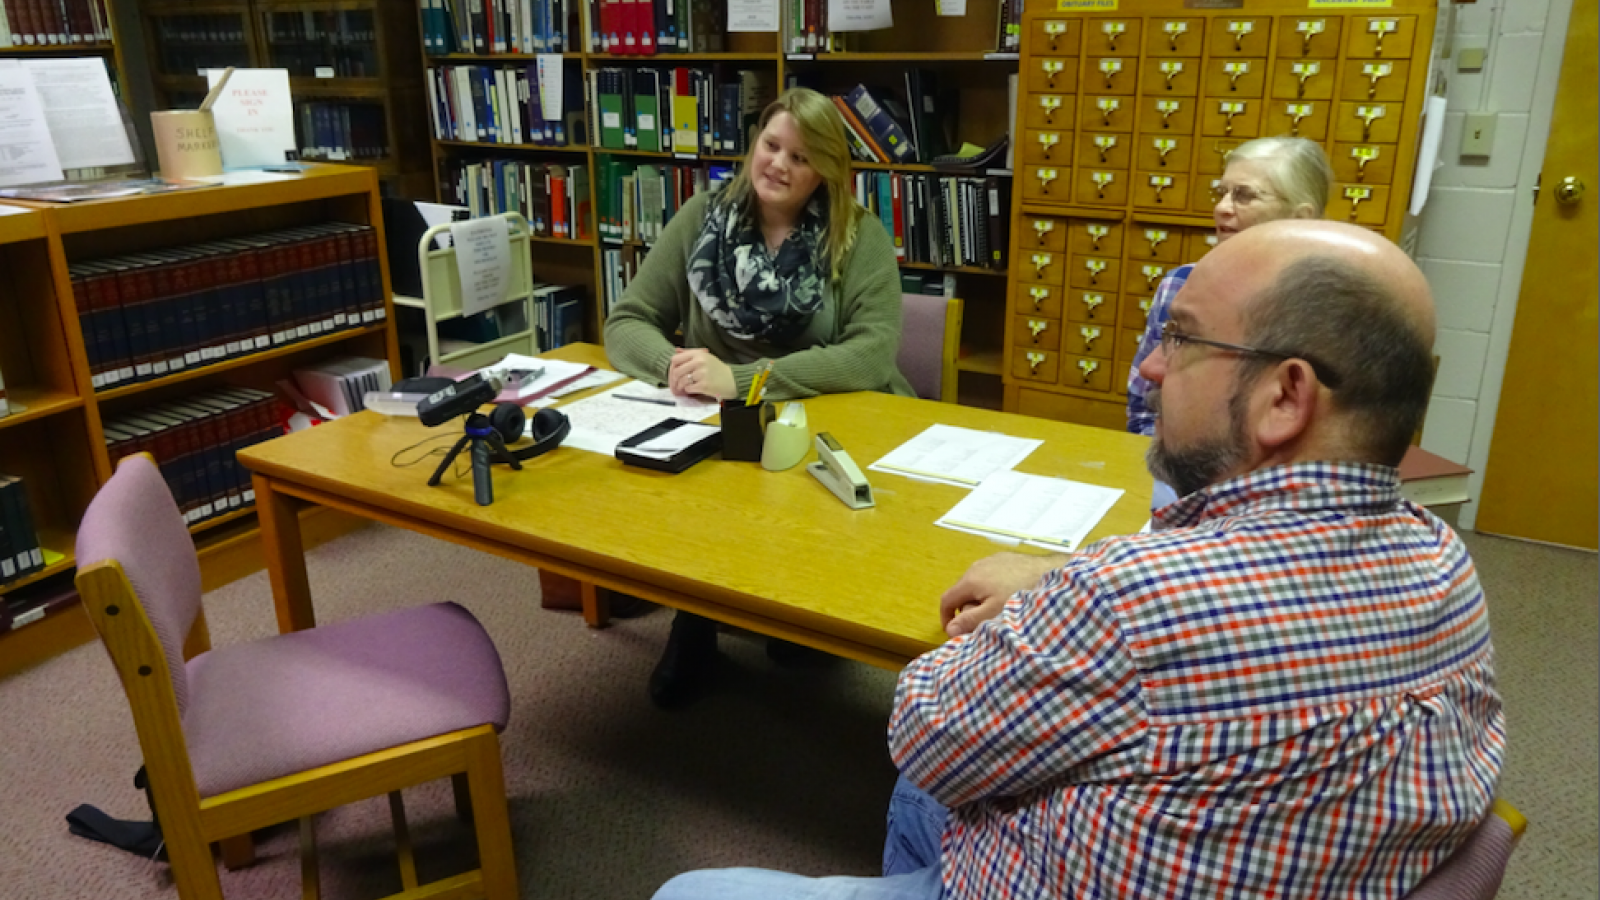 Fieldworker Sarah Hinkelman interviewing Pike county librarian Tom Adkins.